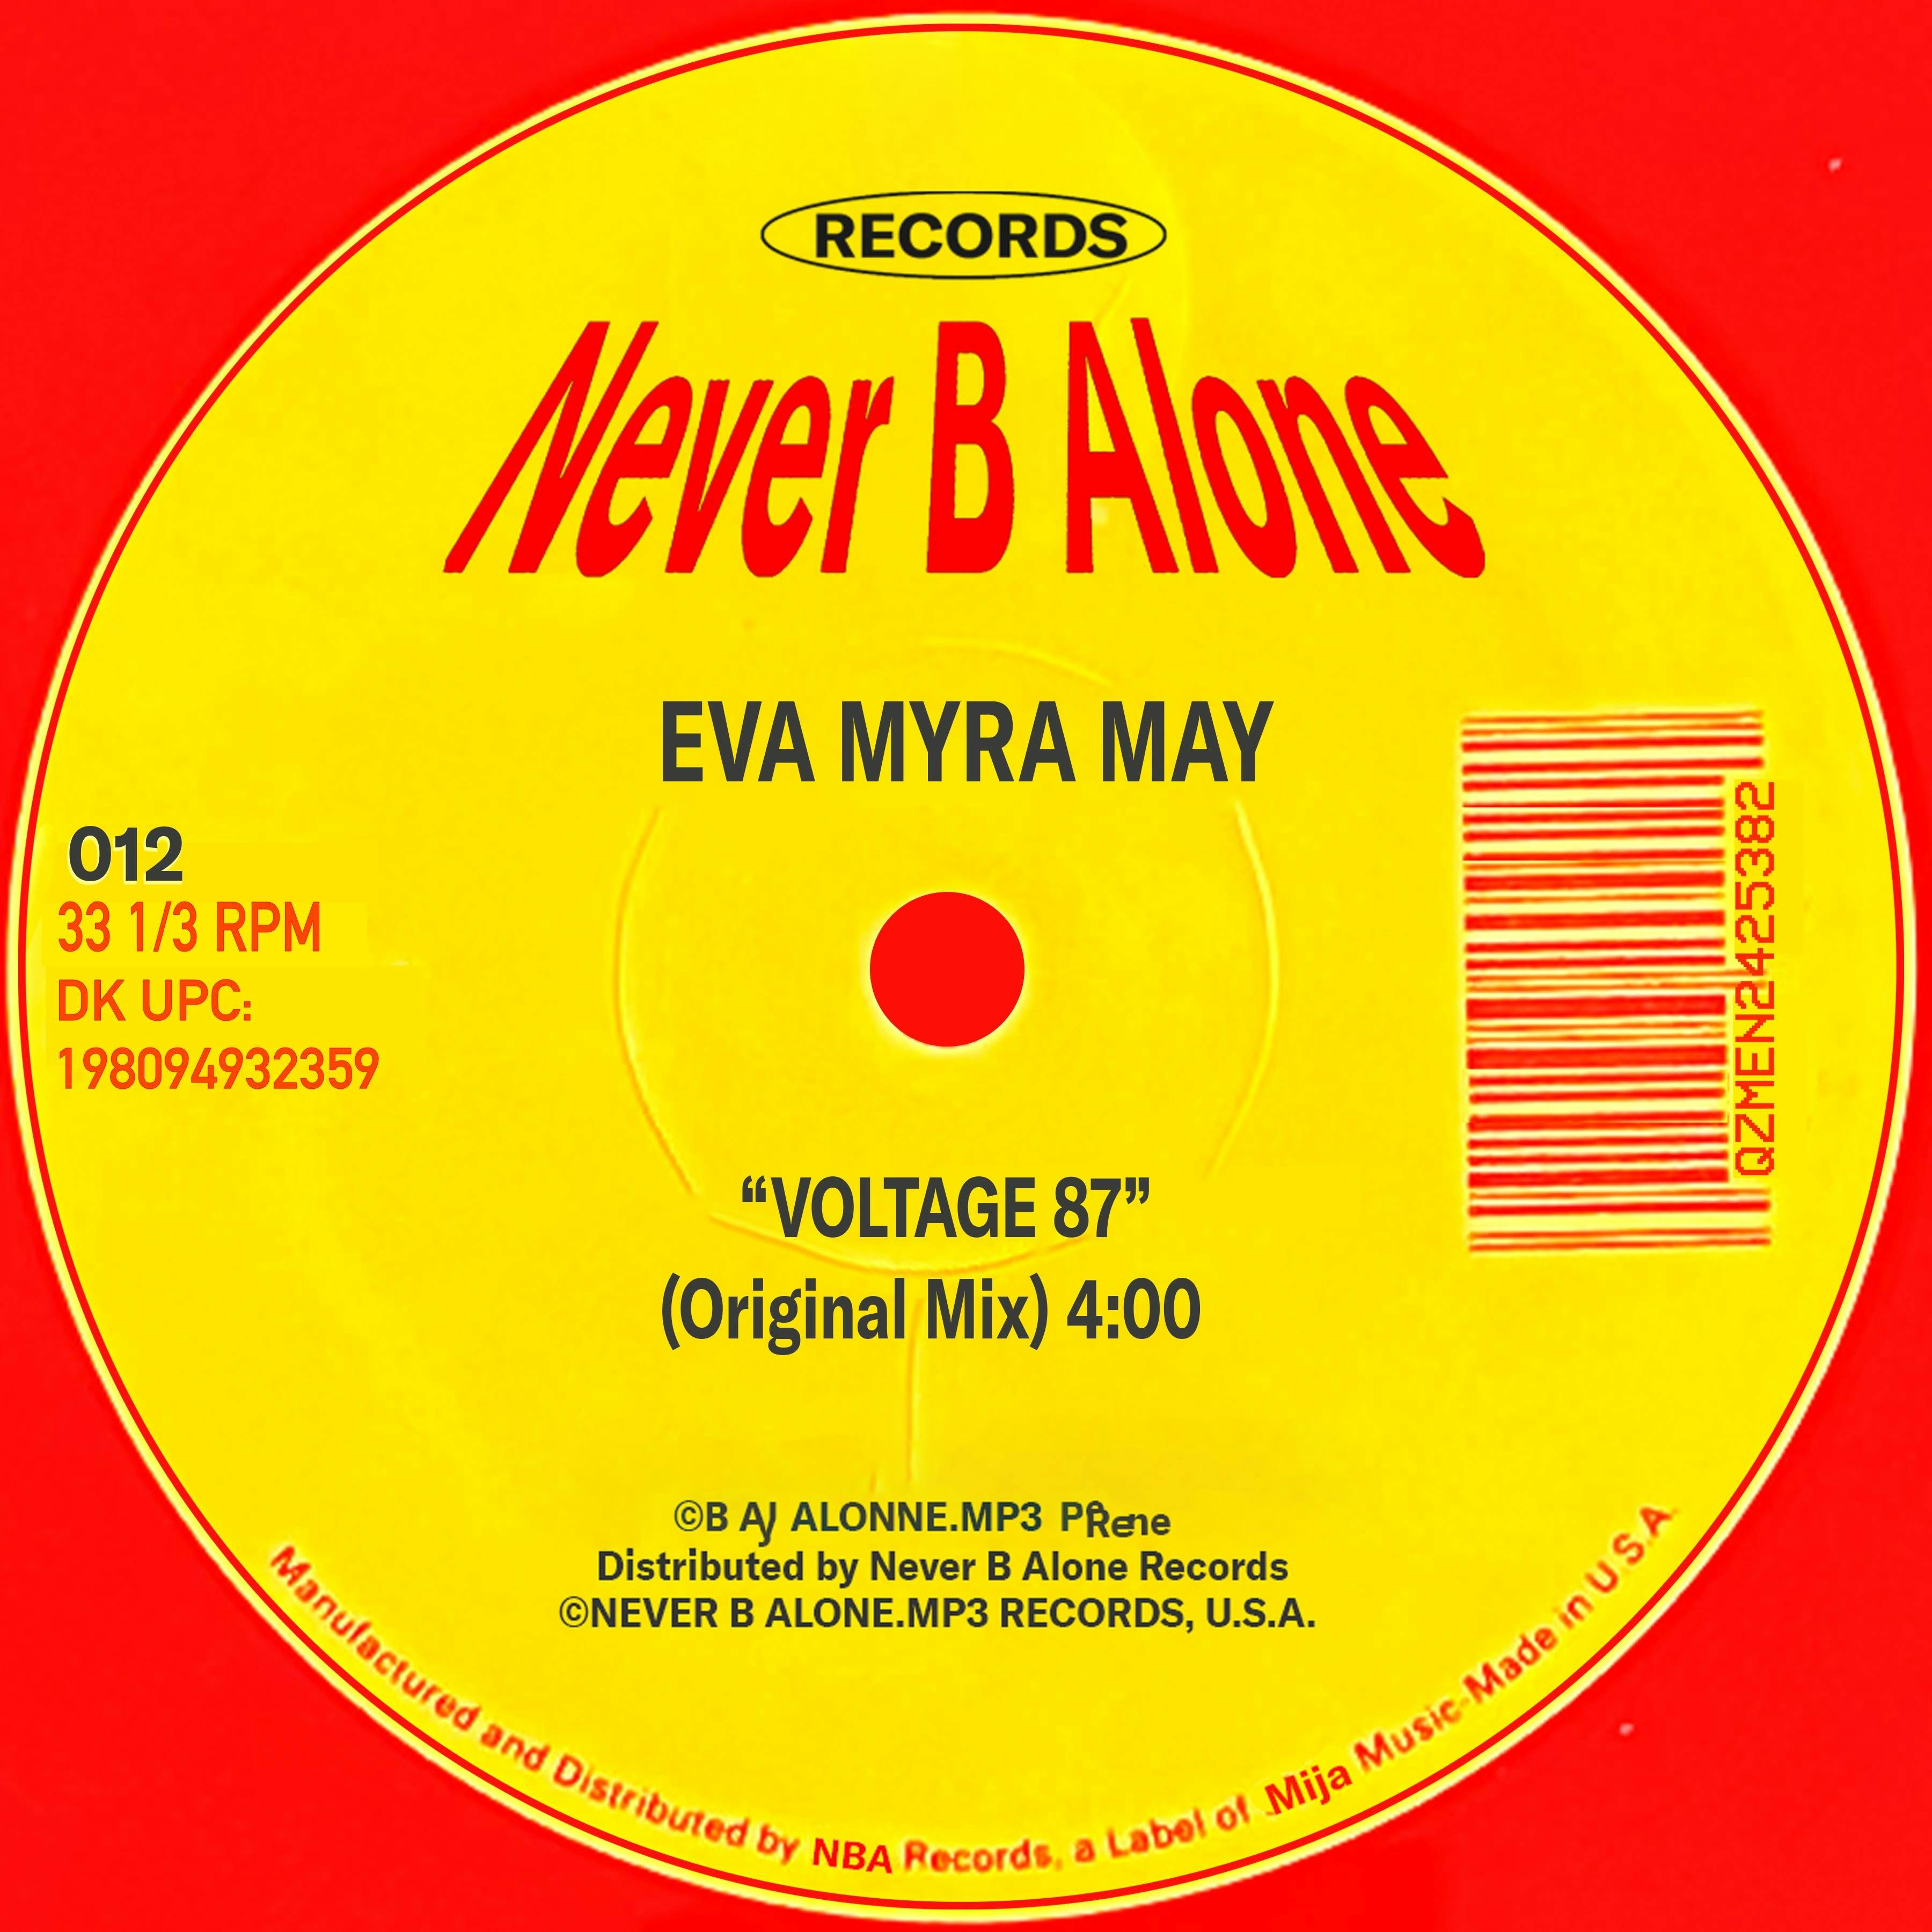 Eva Myra May - "Voltage 97"